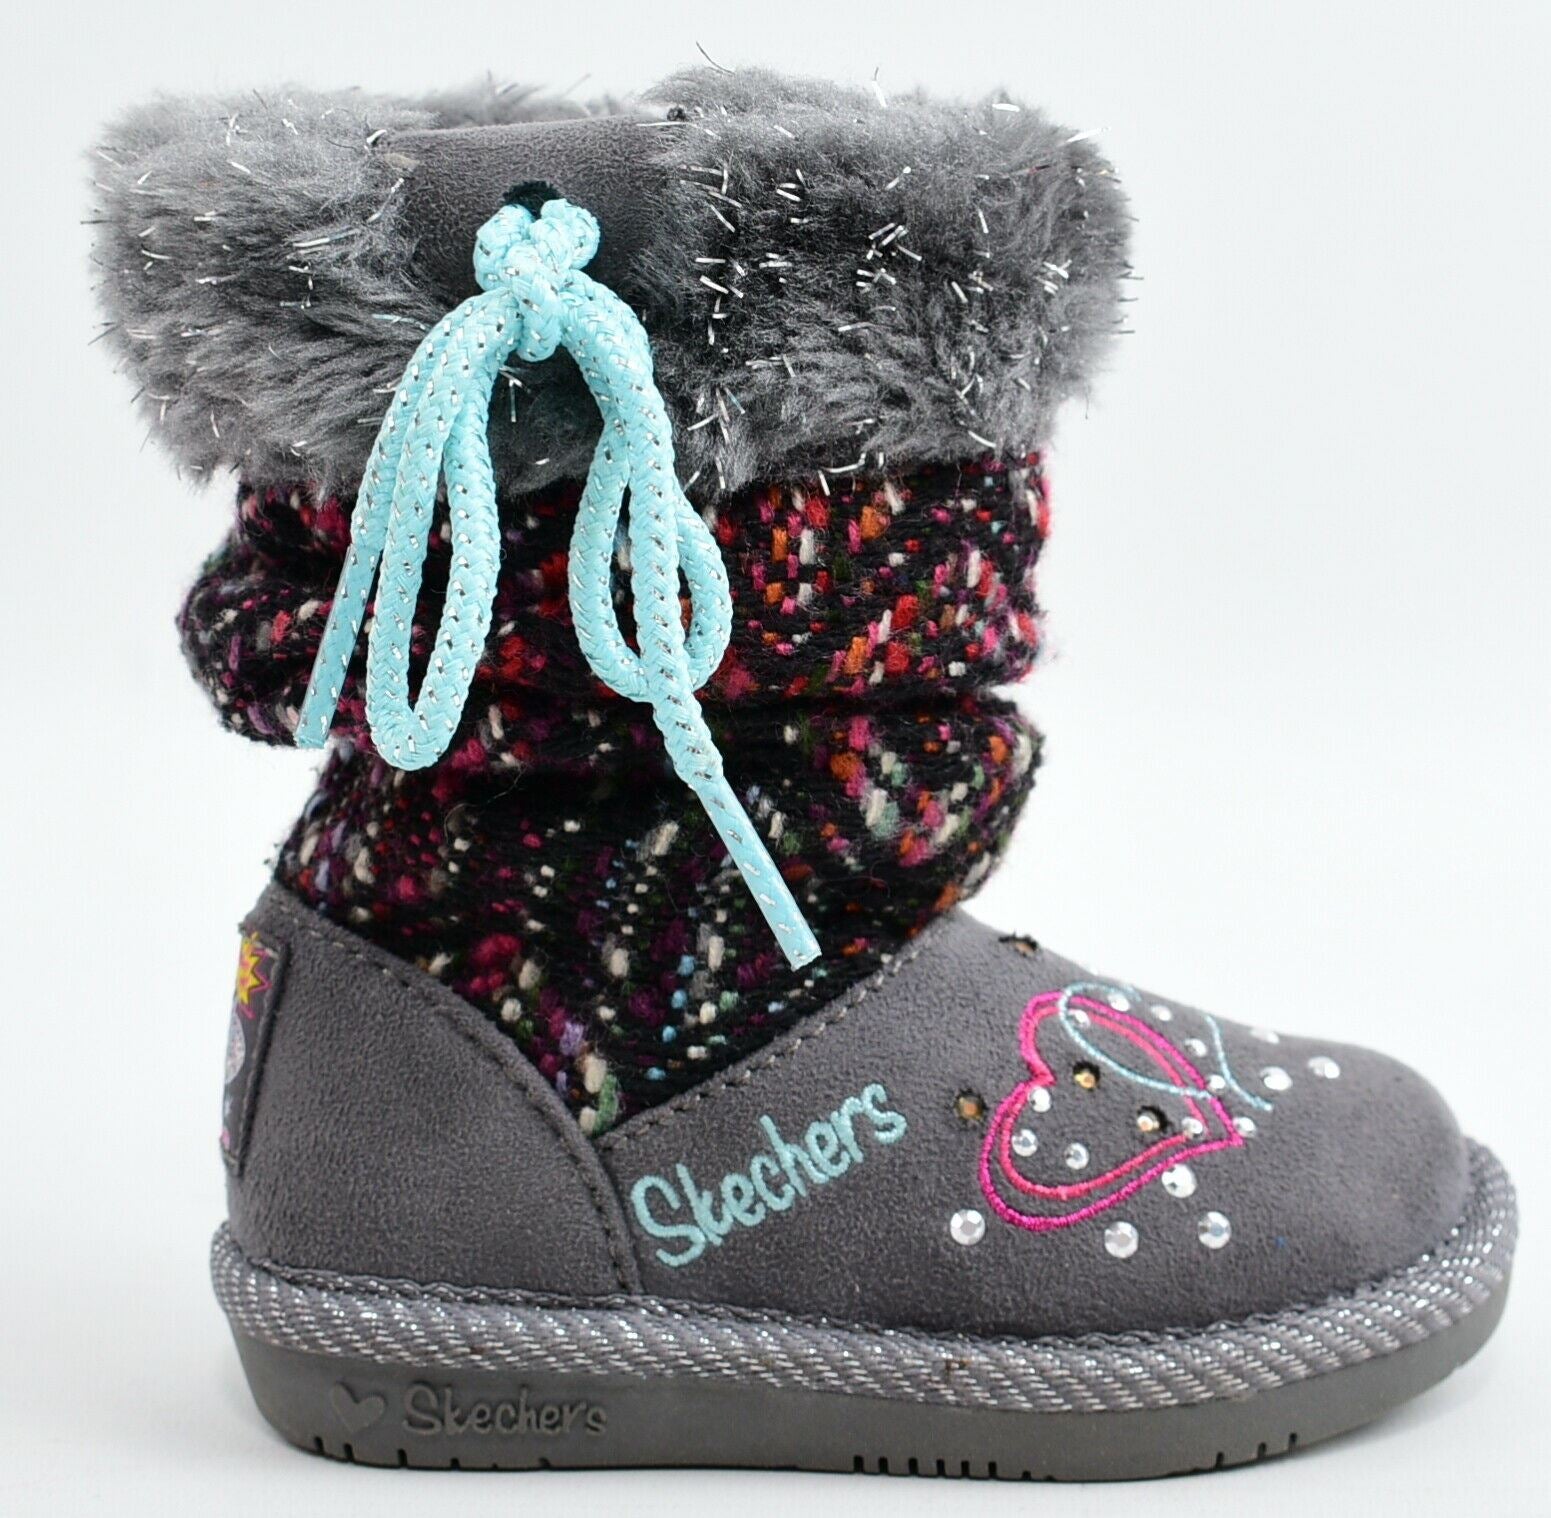 SKECHERS Twinkle Toes Girls' Light Up Boots, Grey/Multi, infant UK 4 / EU 21